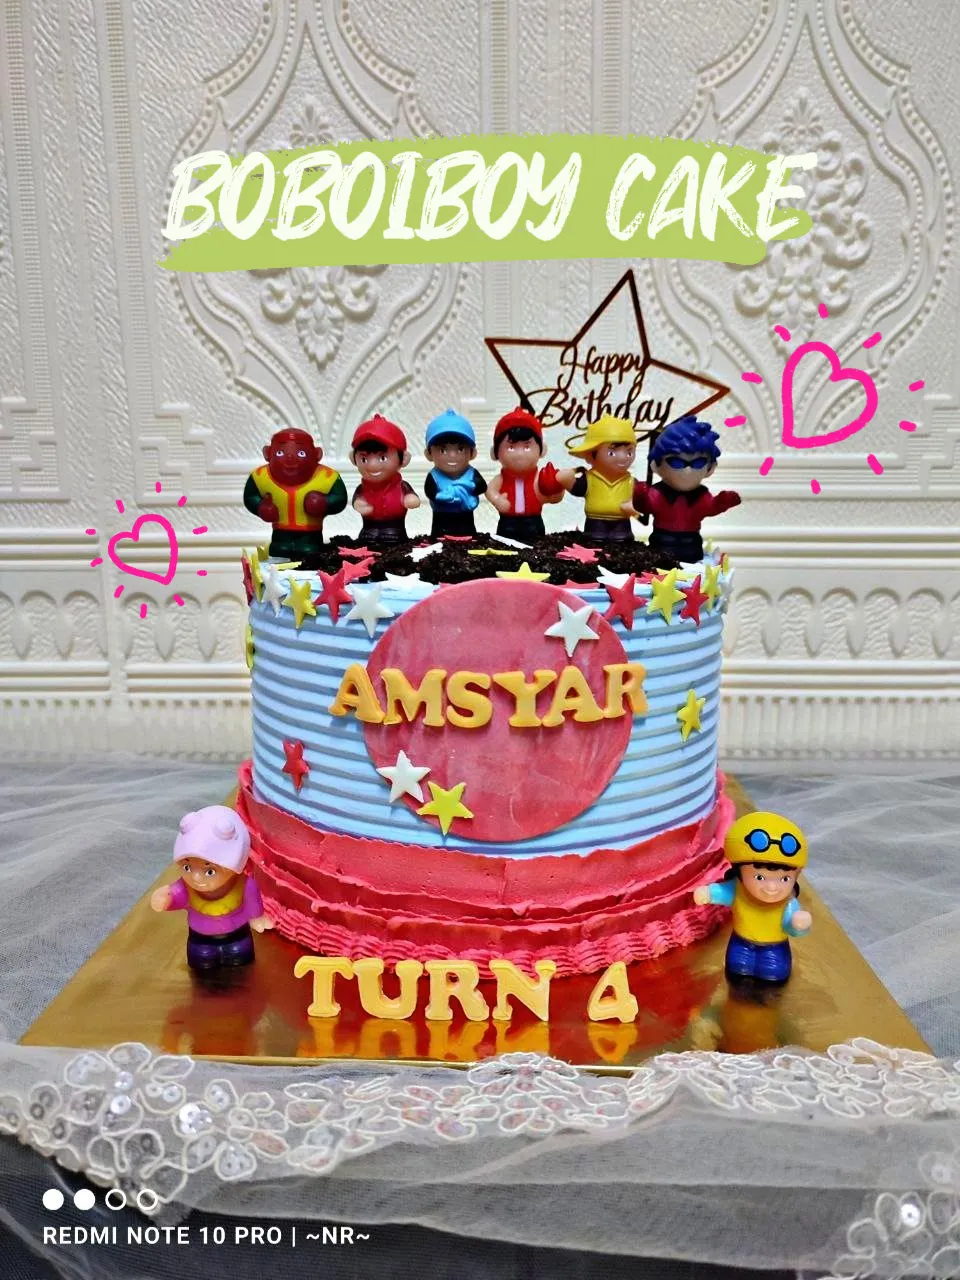 Boboiboy Cake, Food & Drinks, Homemade Bakes on Carousell